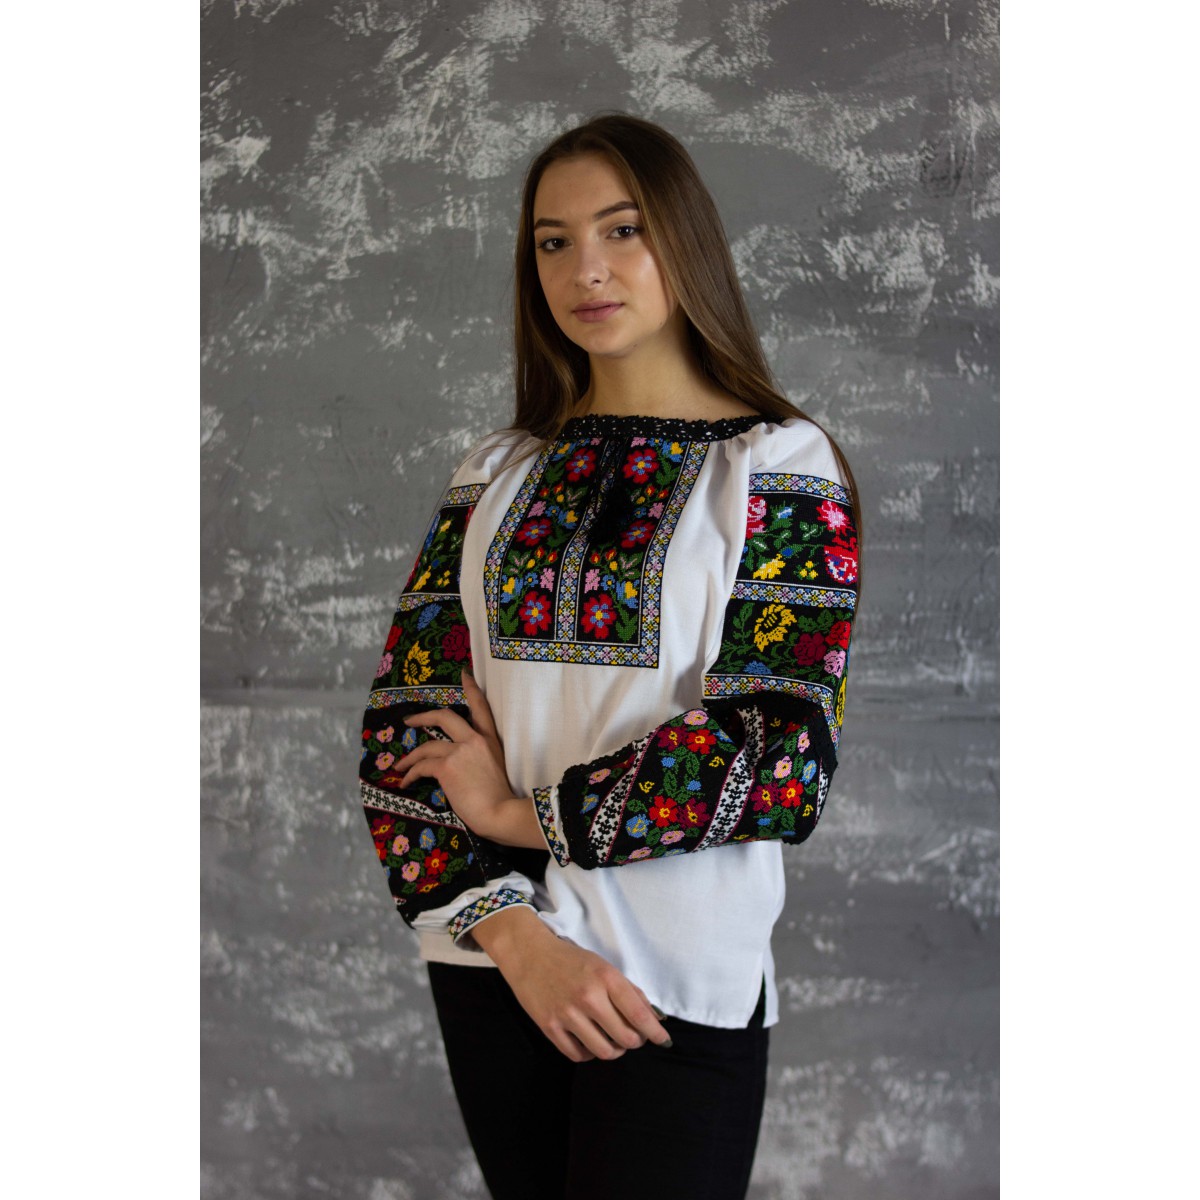 vyshyvanka,Ukrainian embroidery Details about   Ukrainian embroidered blouse t-shirt sorochka 